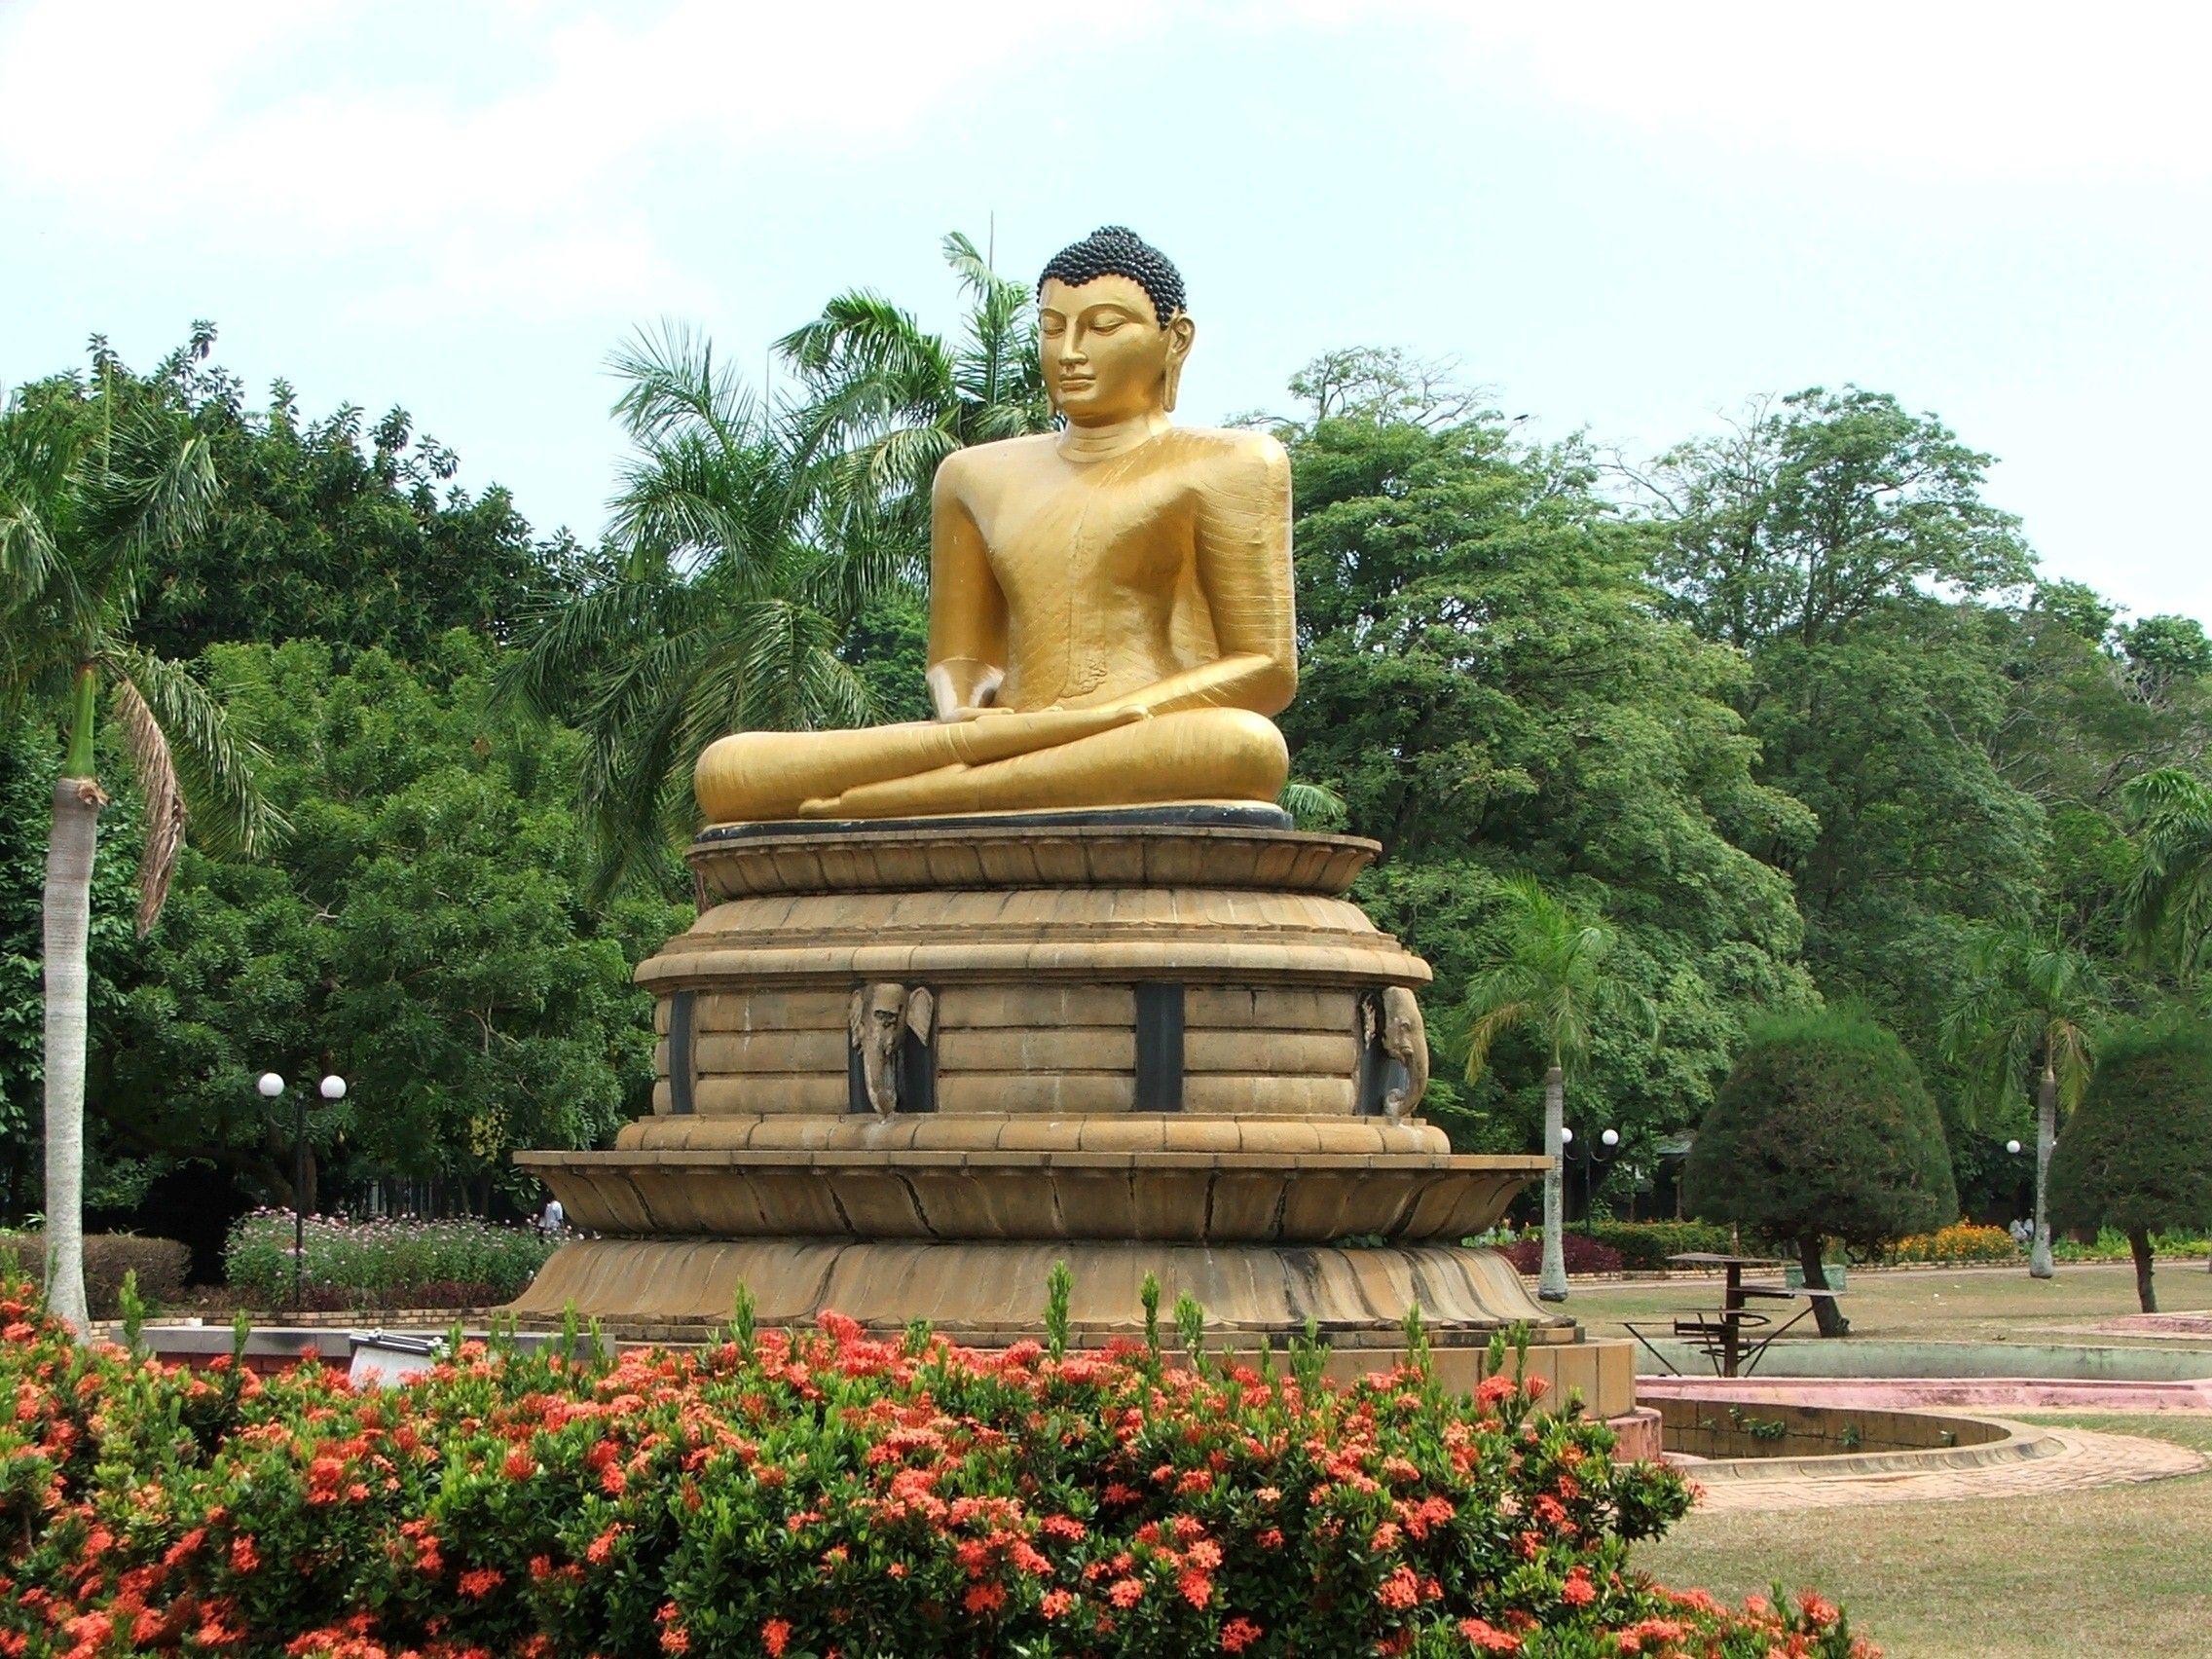 Gautam Buddha HD Wallpaper Image Picture Photo Download